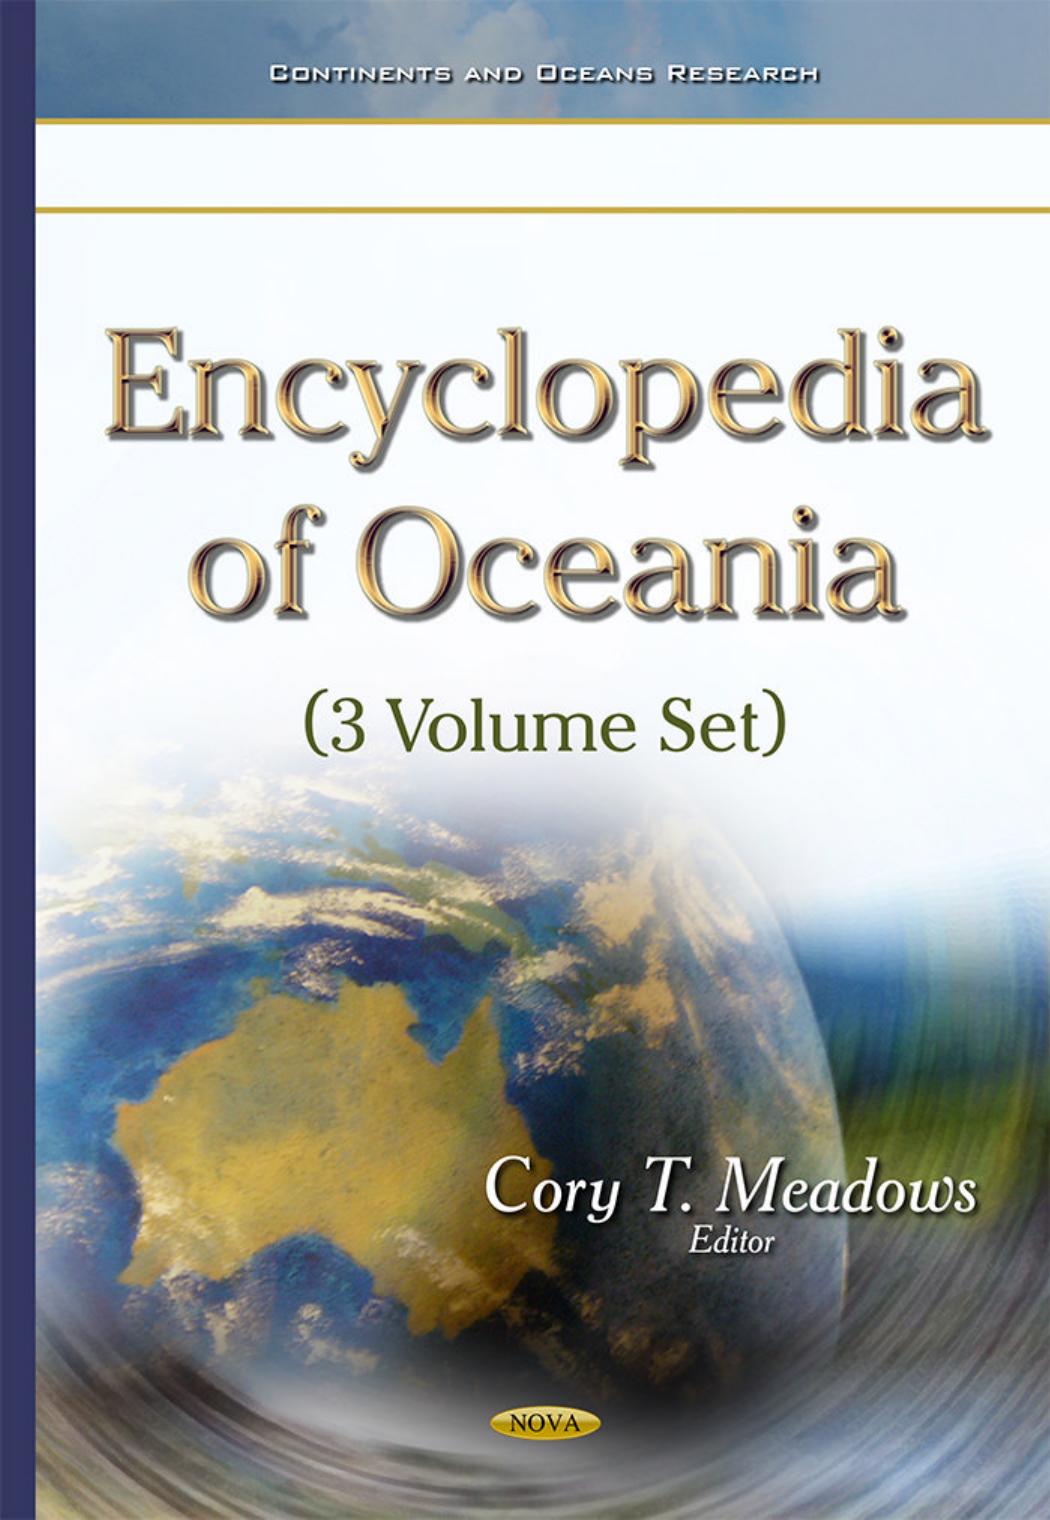 Encyclopedia of Oceania (3 Volume Set)